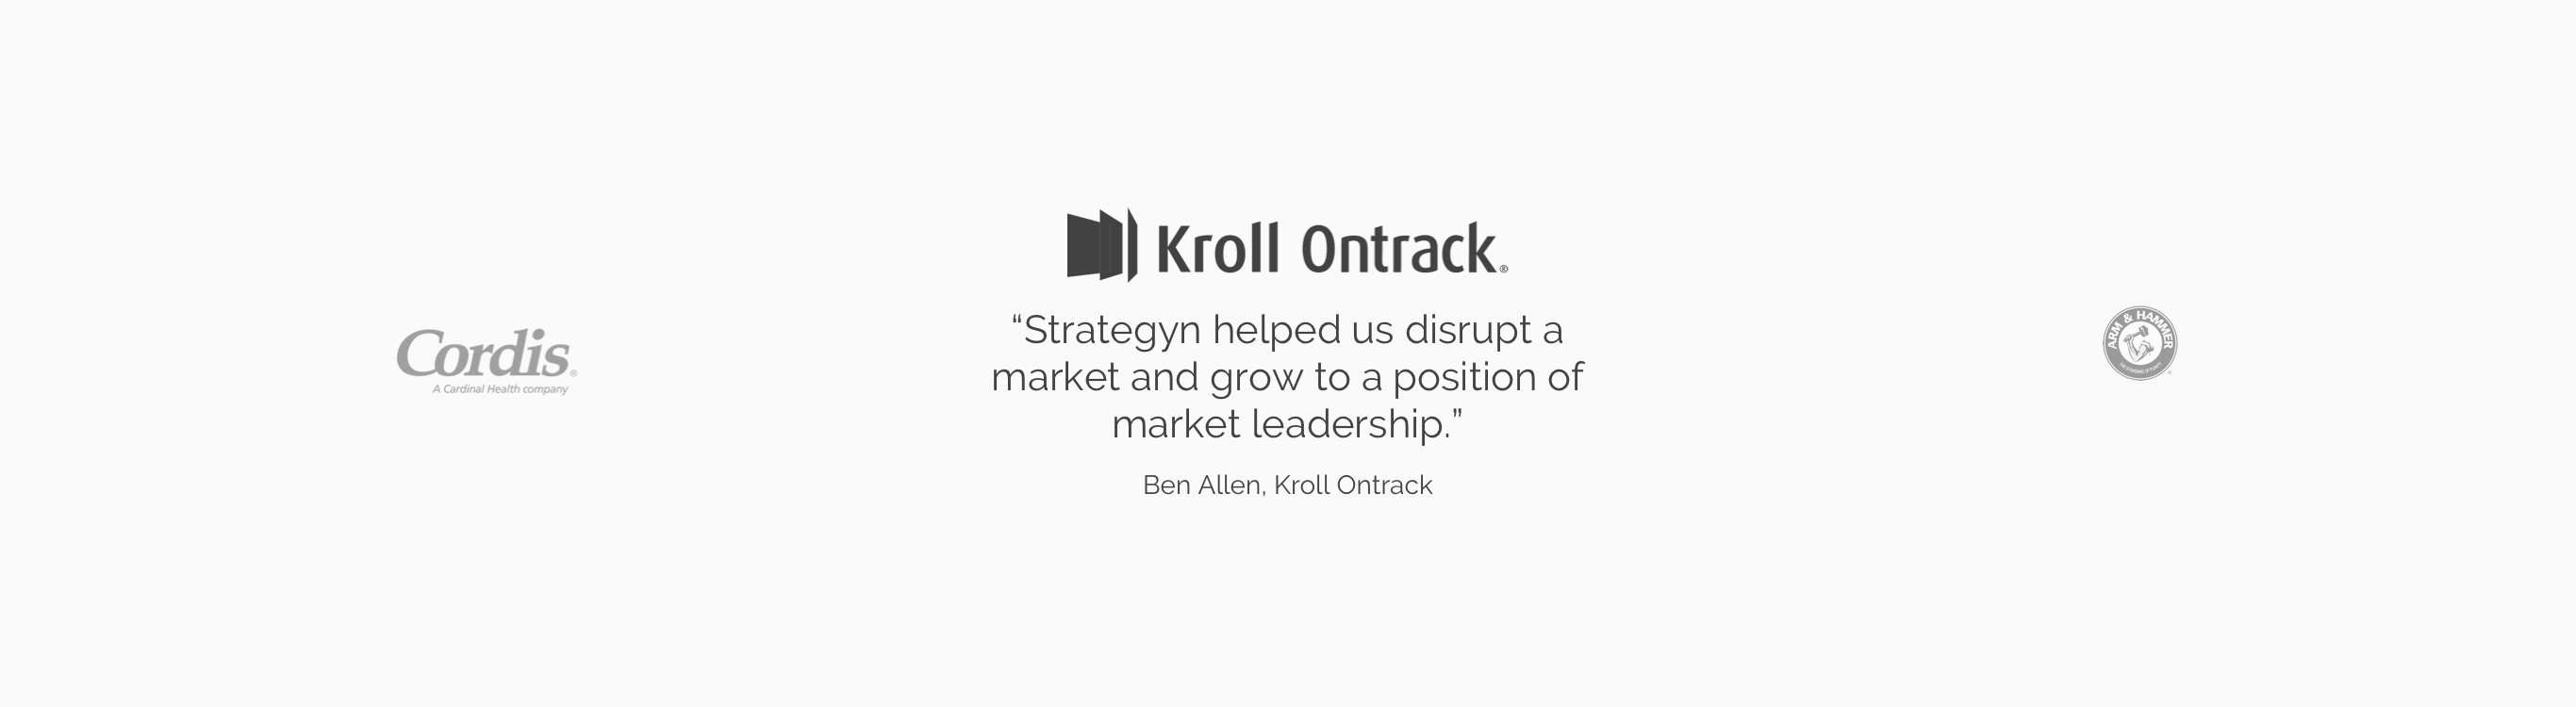 Kroll Outcome Driven Innovation Testimonial